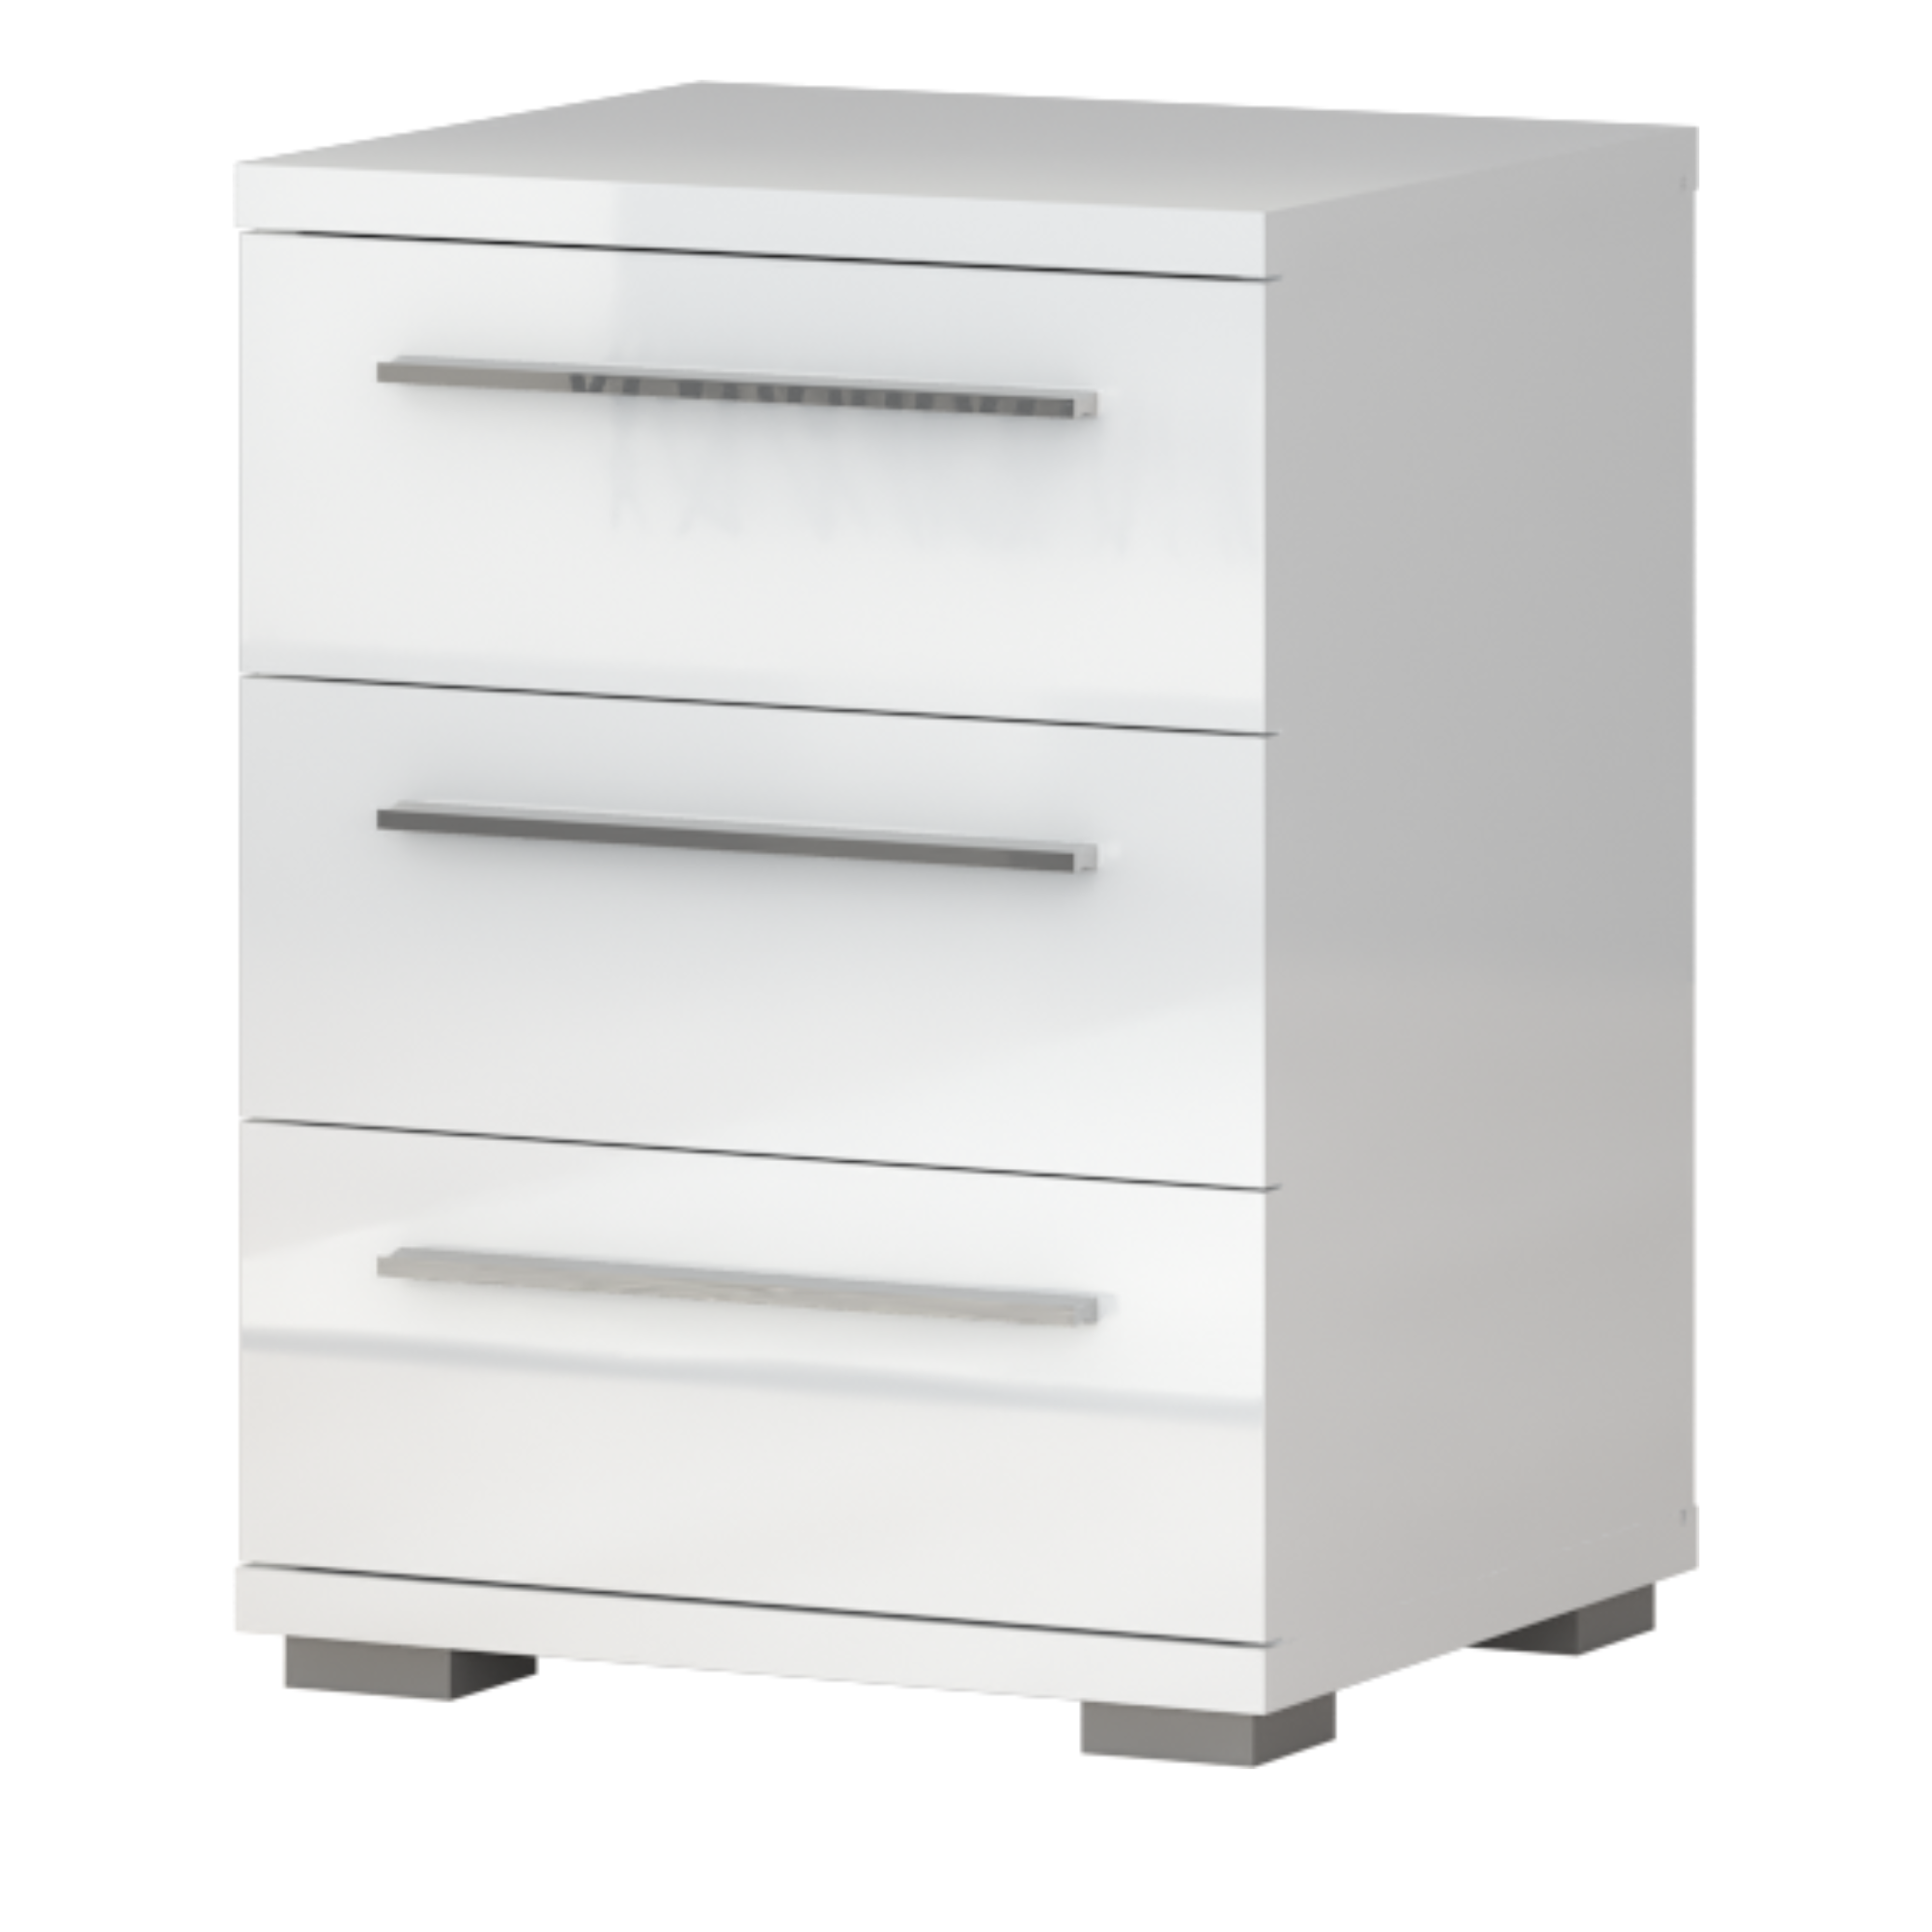 Piano Night Stand - Three Drawer Storage with High-Gloss Finish - Furniture.Agency